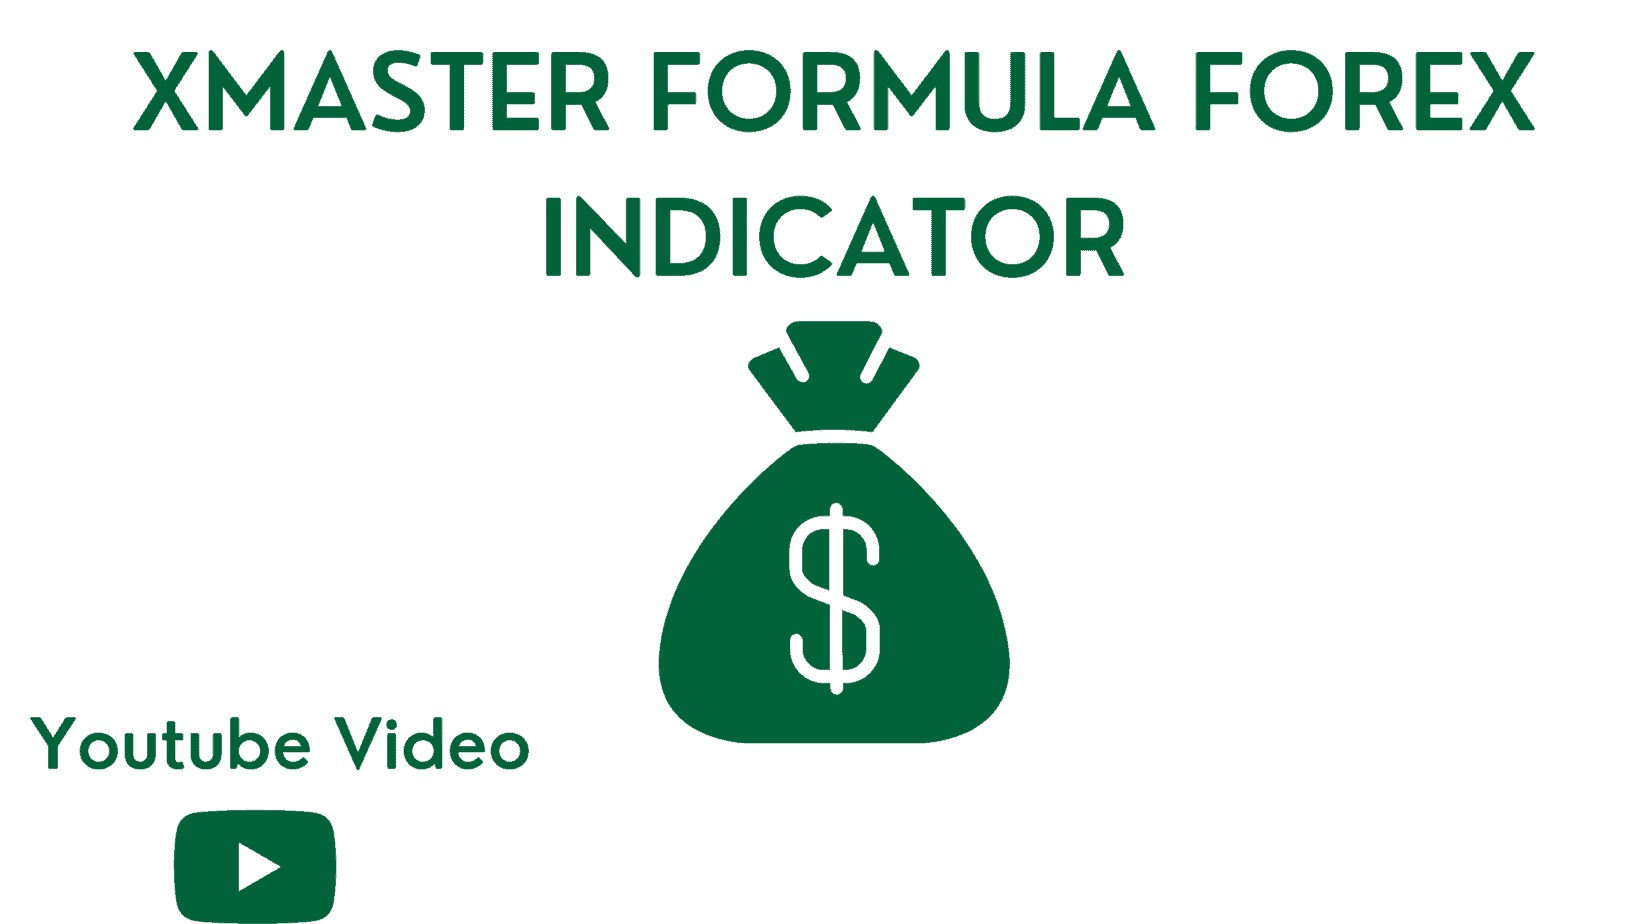 Xmaster Formula Forex Indicator Guideline for 2020 2021 2022